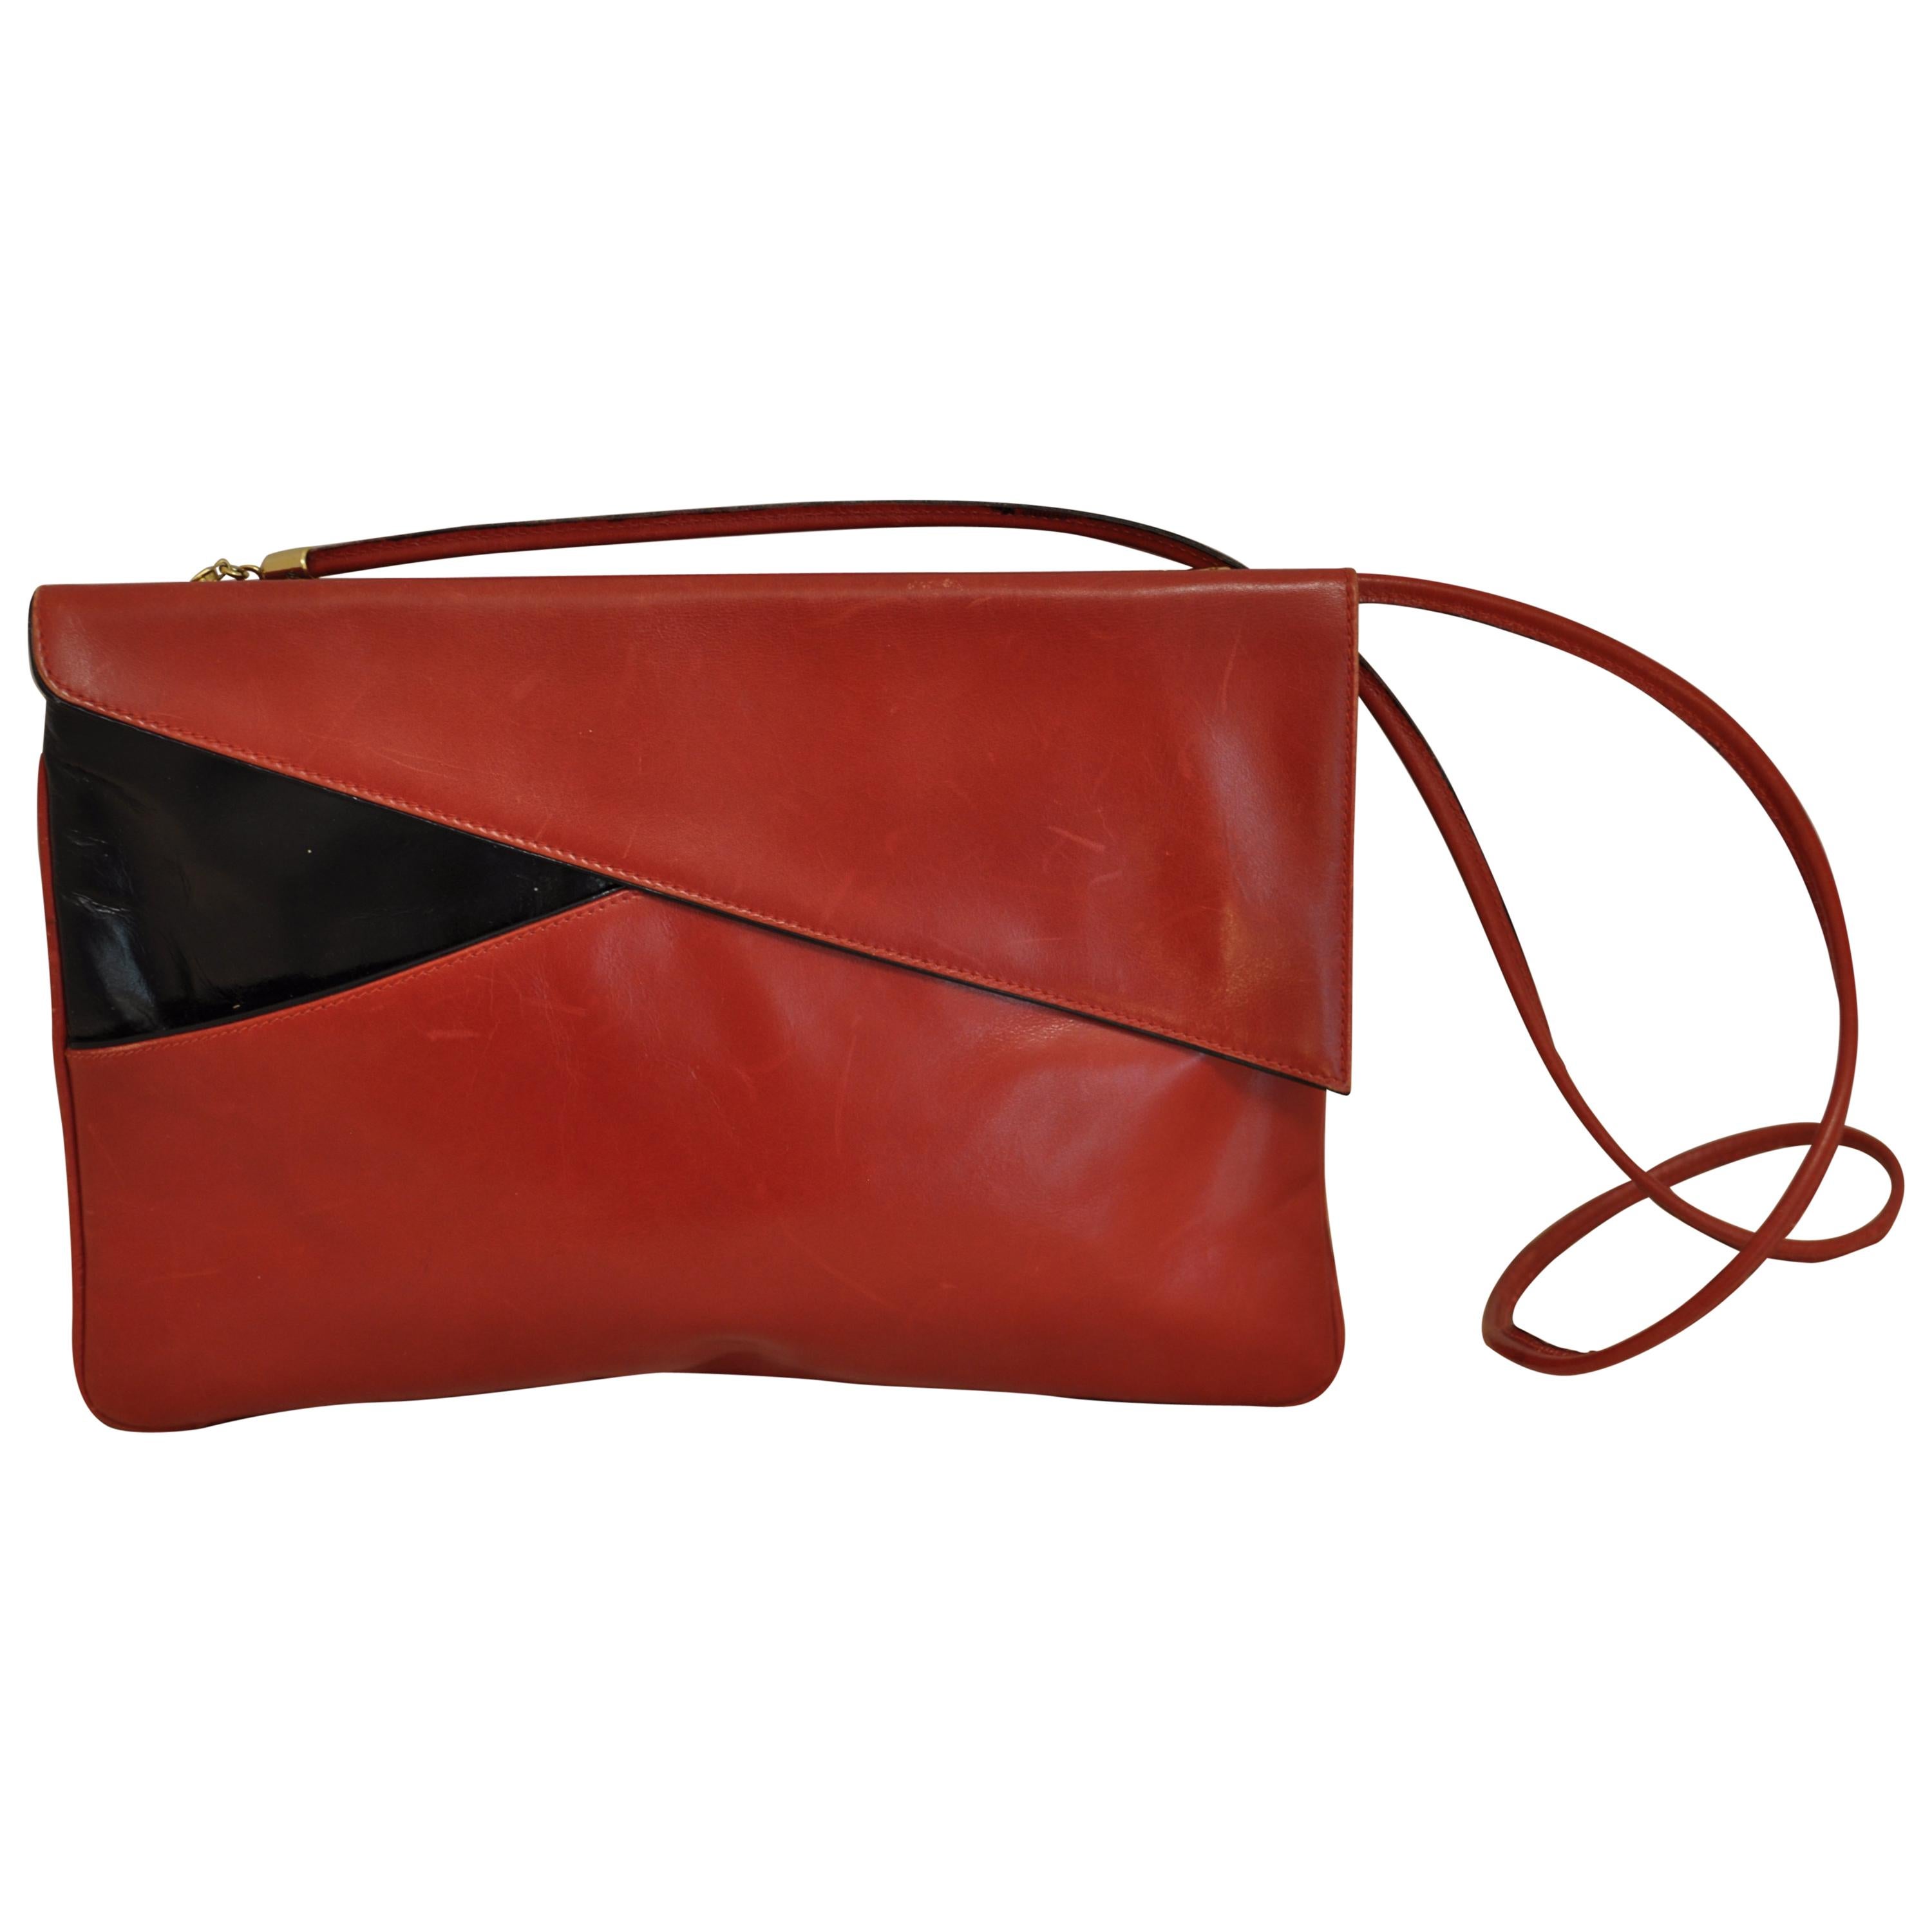 Salvatore Ferragamo Firenze Red and Black Leather Envelope Crossbody / Clutch